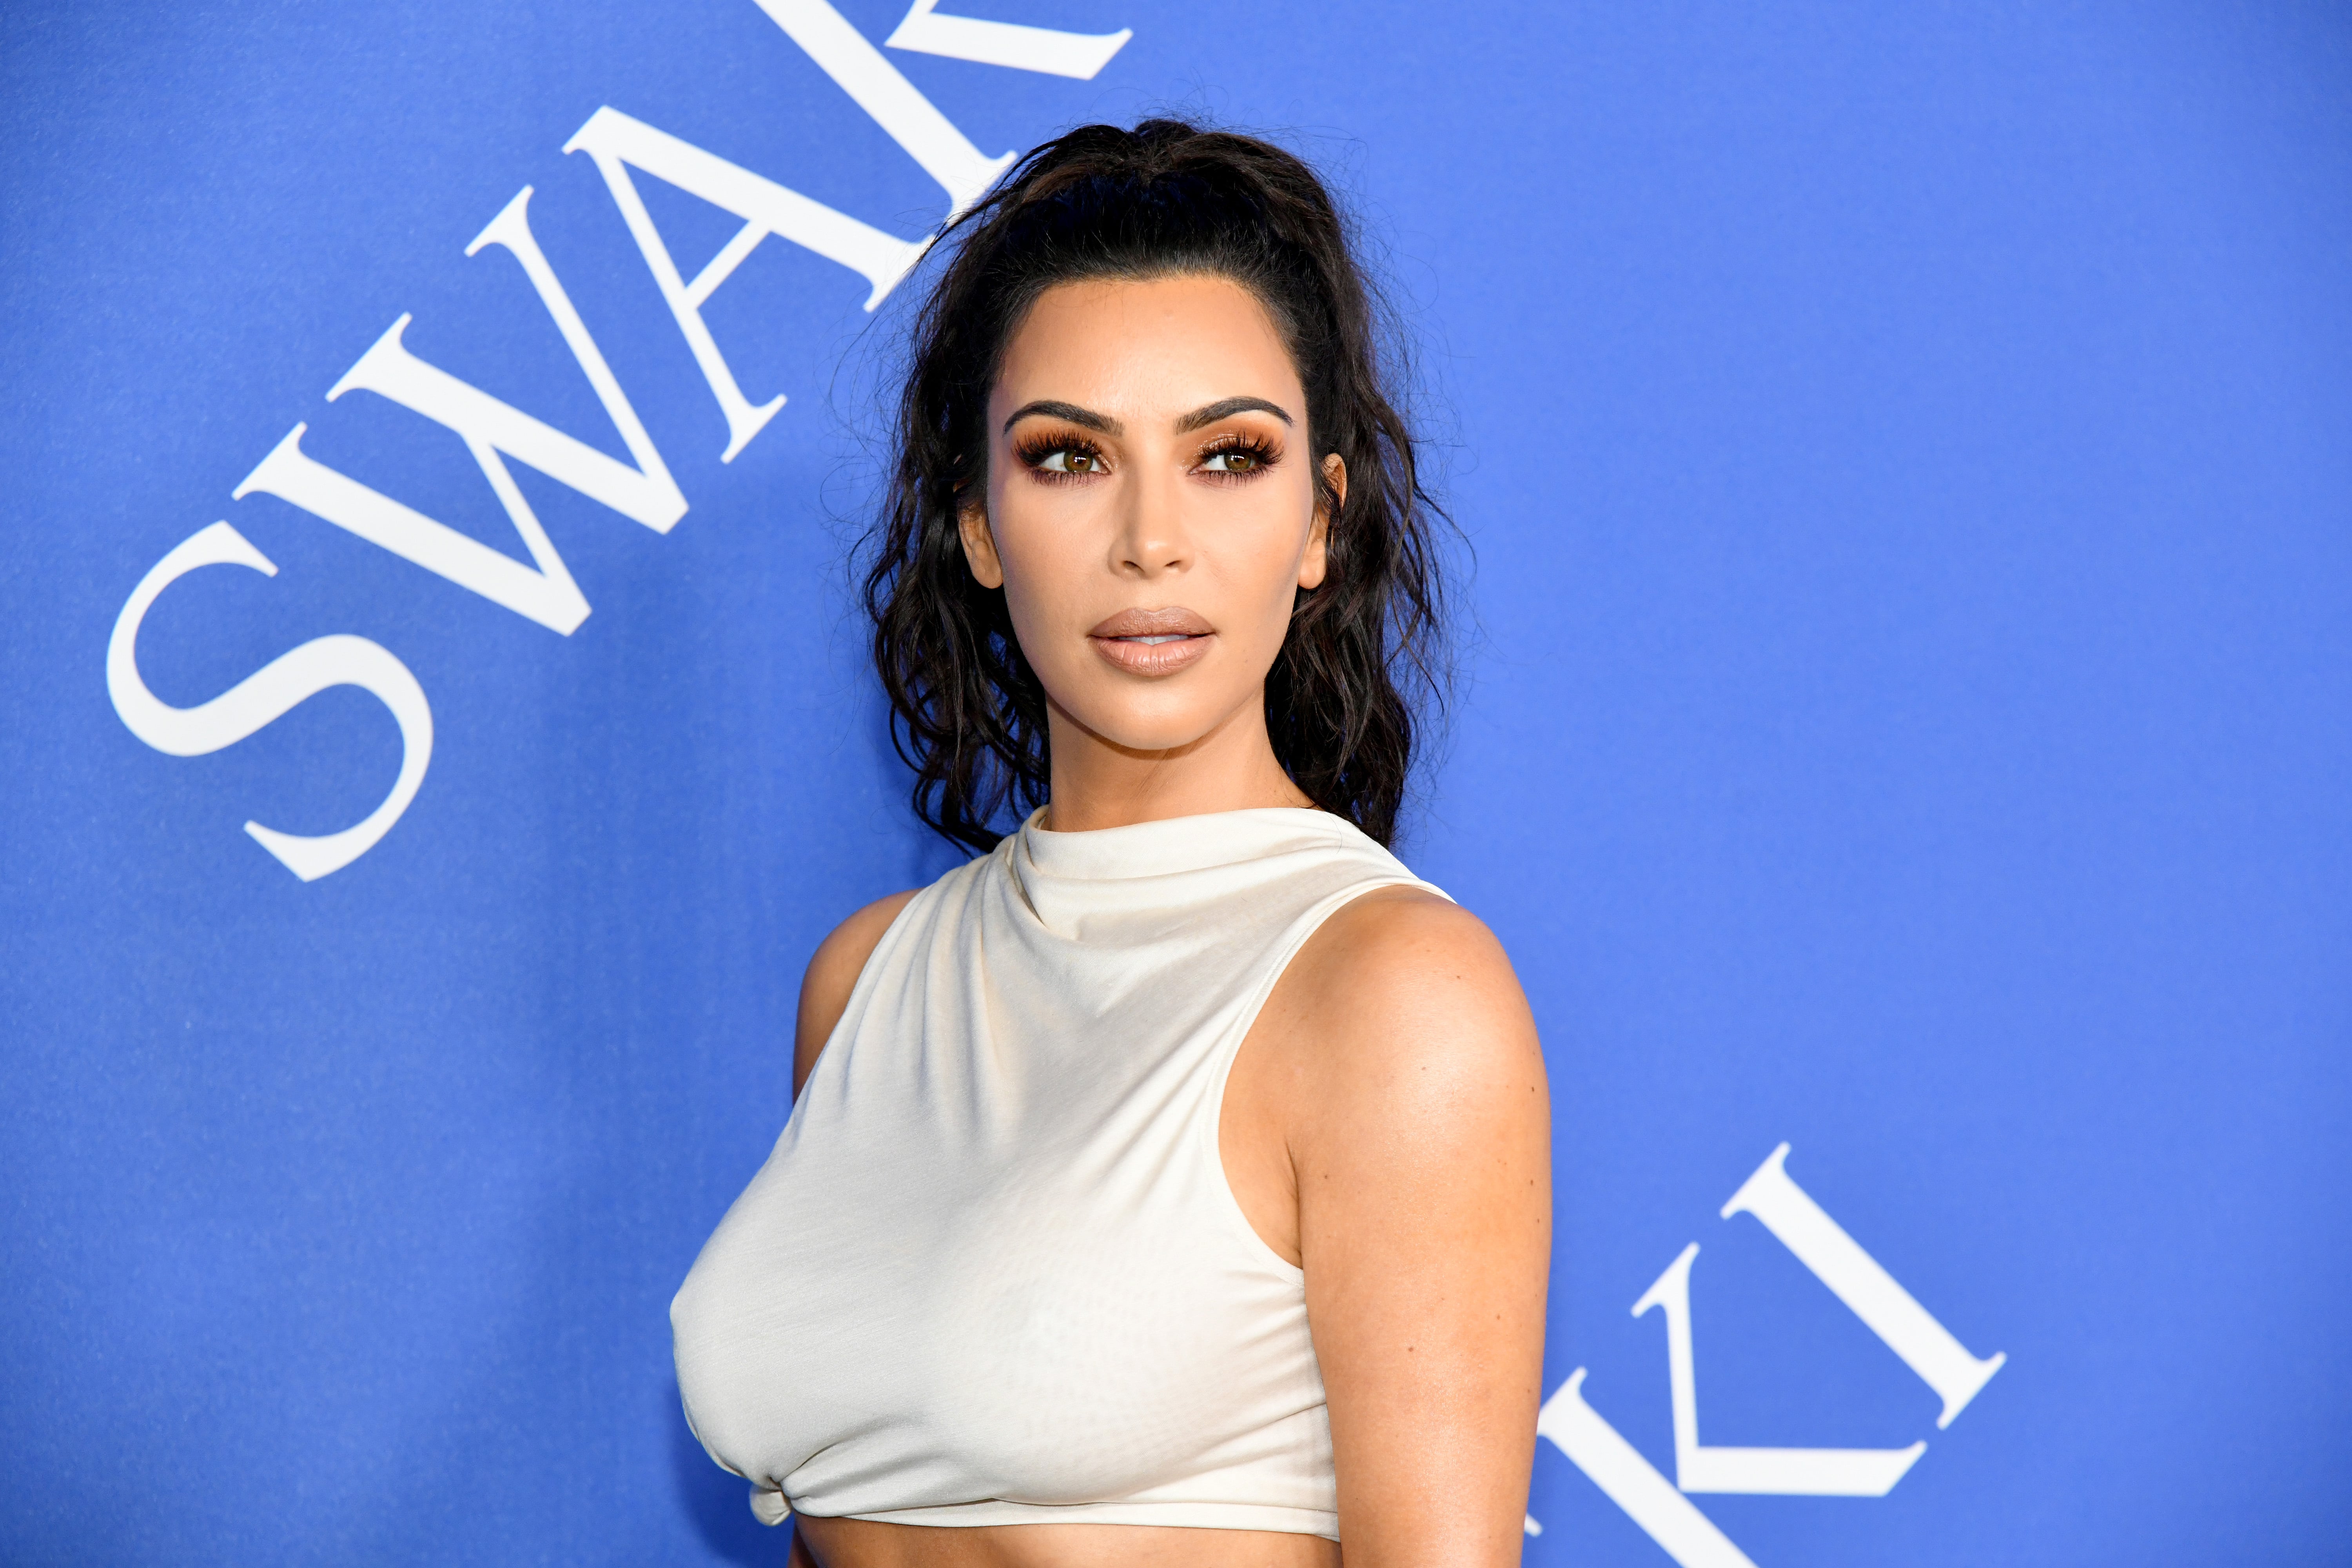 Kim Kardashian's latest SKIMS campaign accused of photoshopping